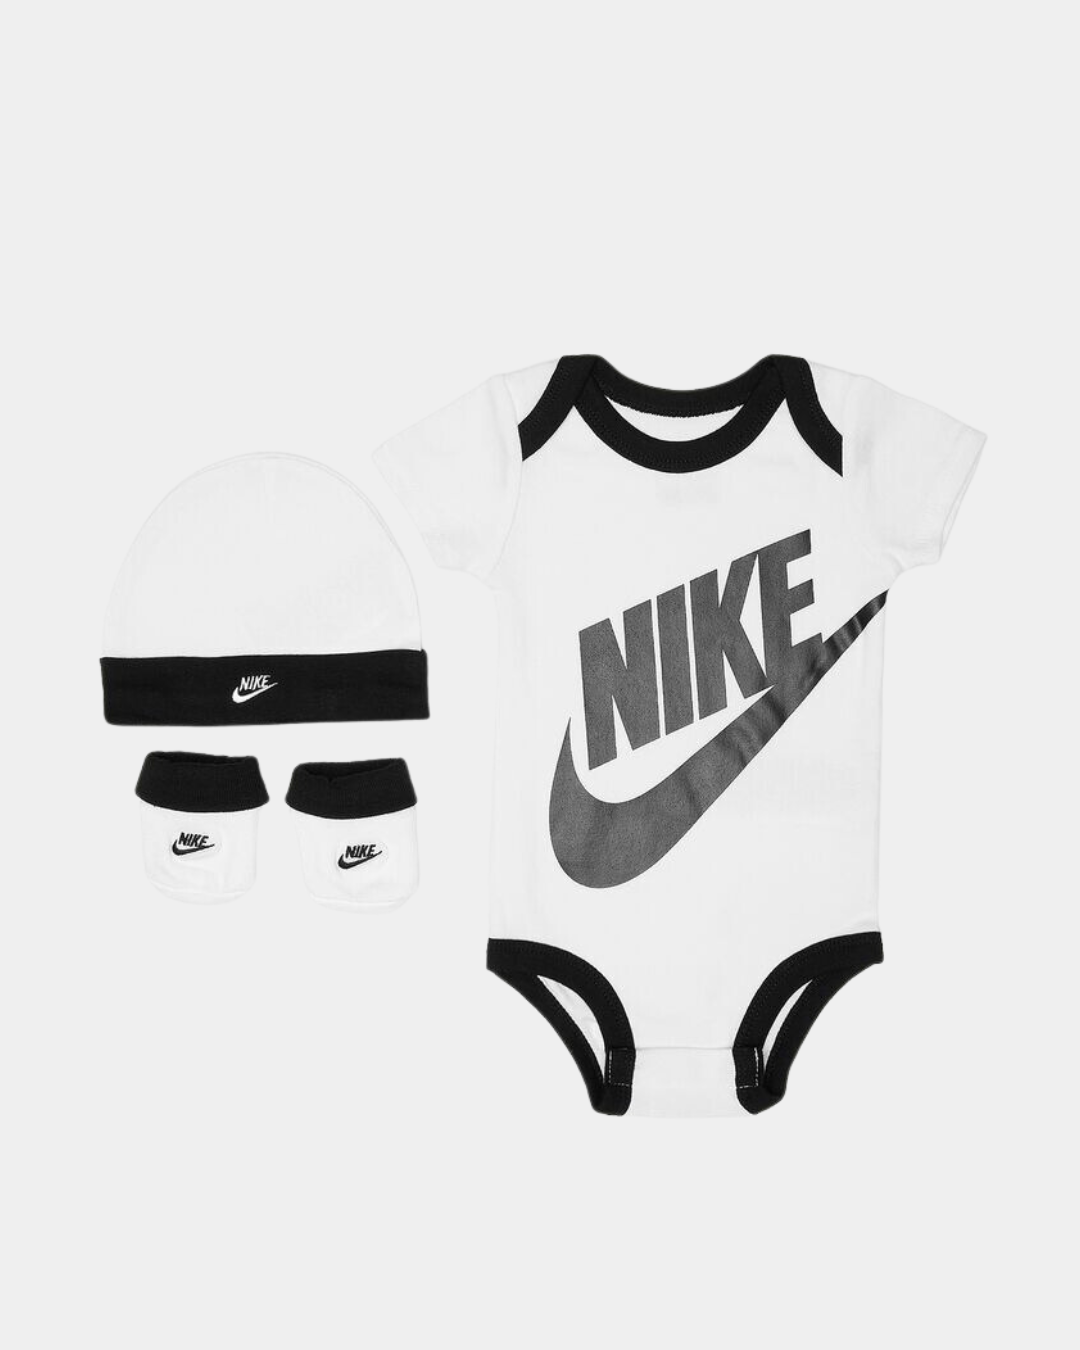 Nike Baby Set -Black/White